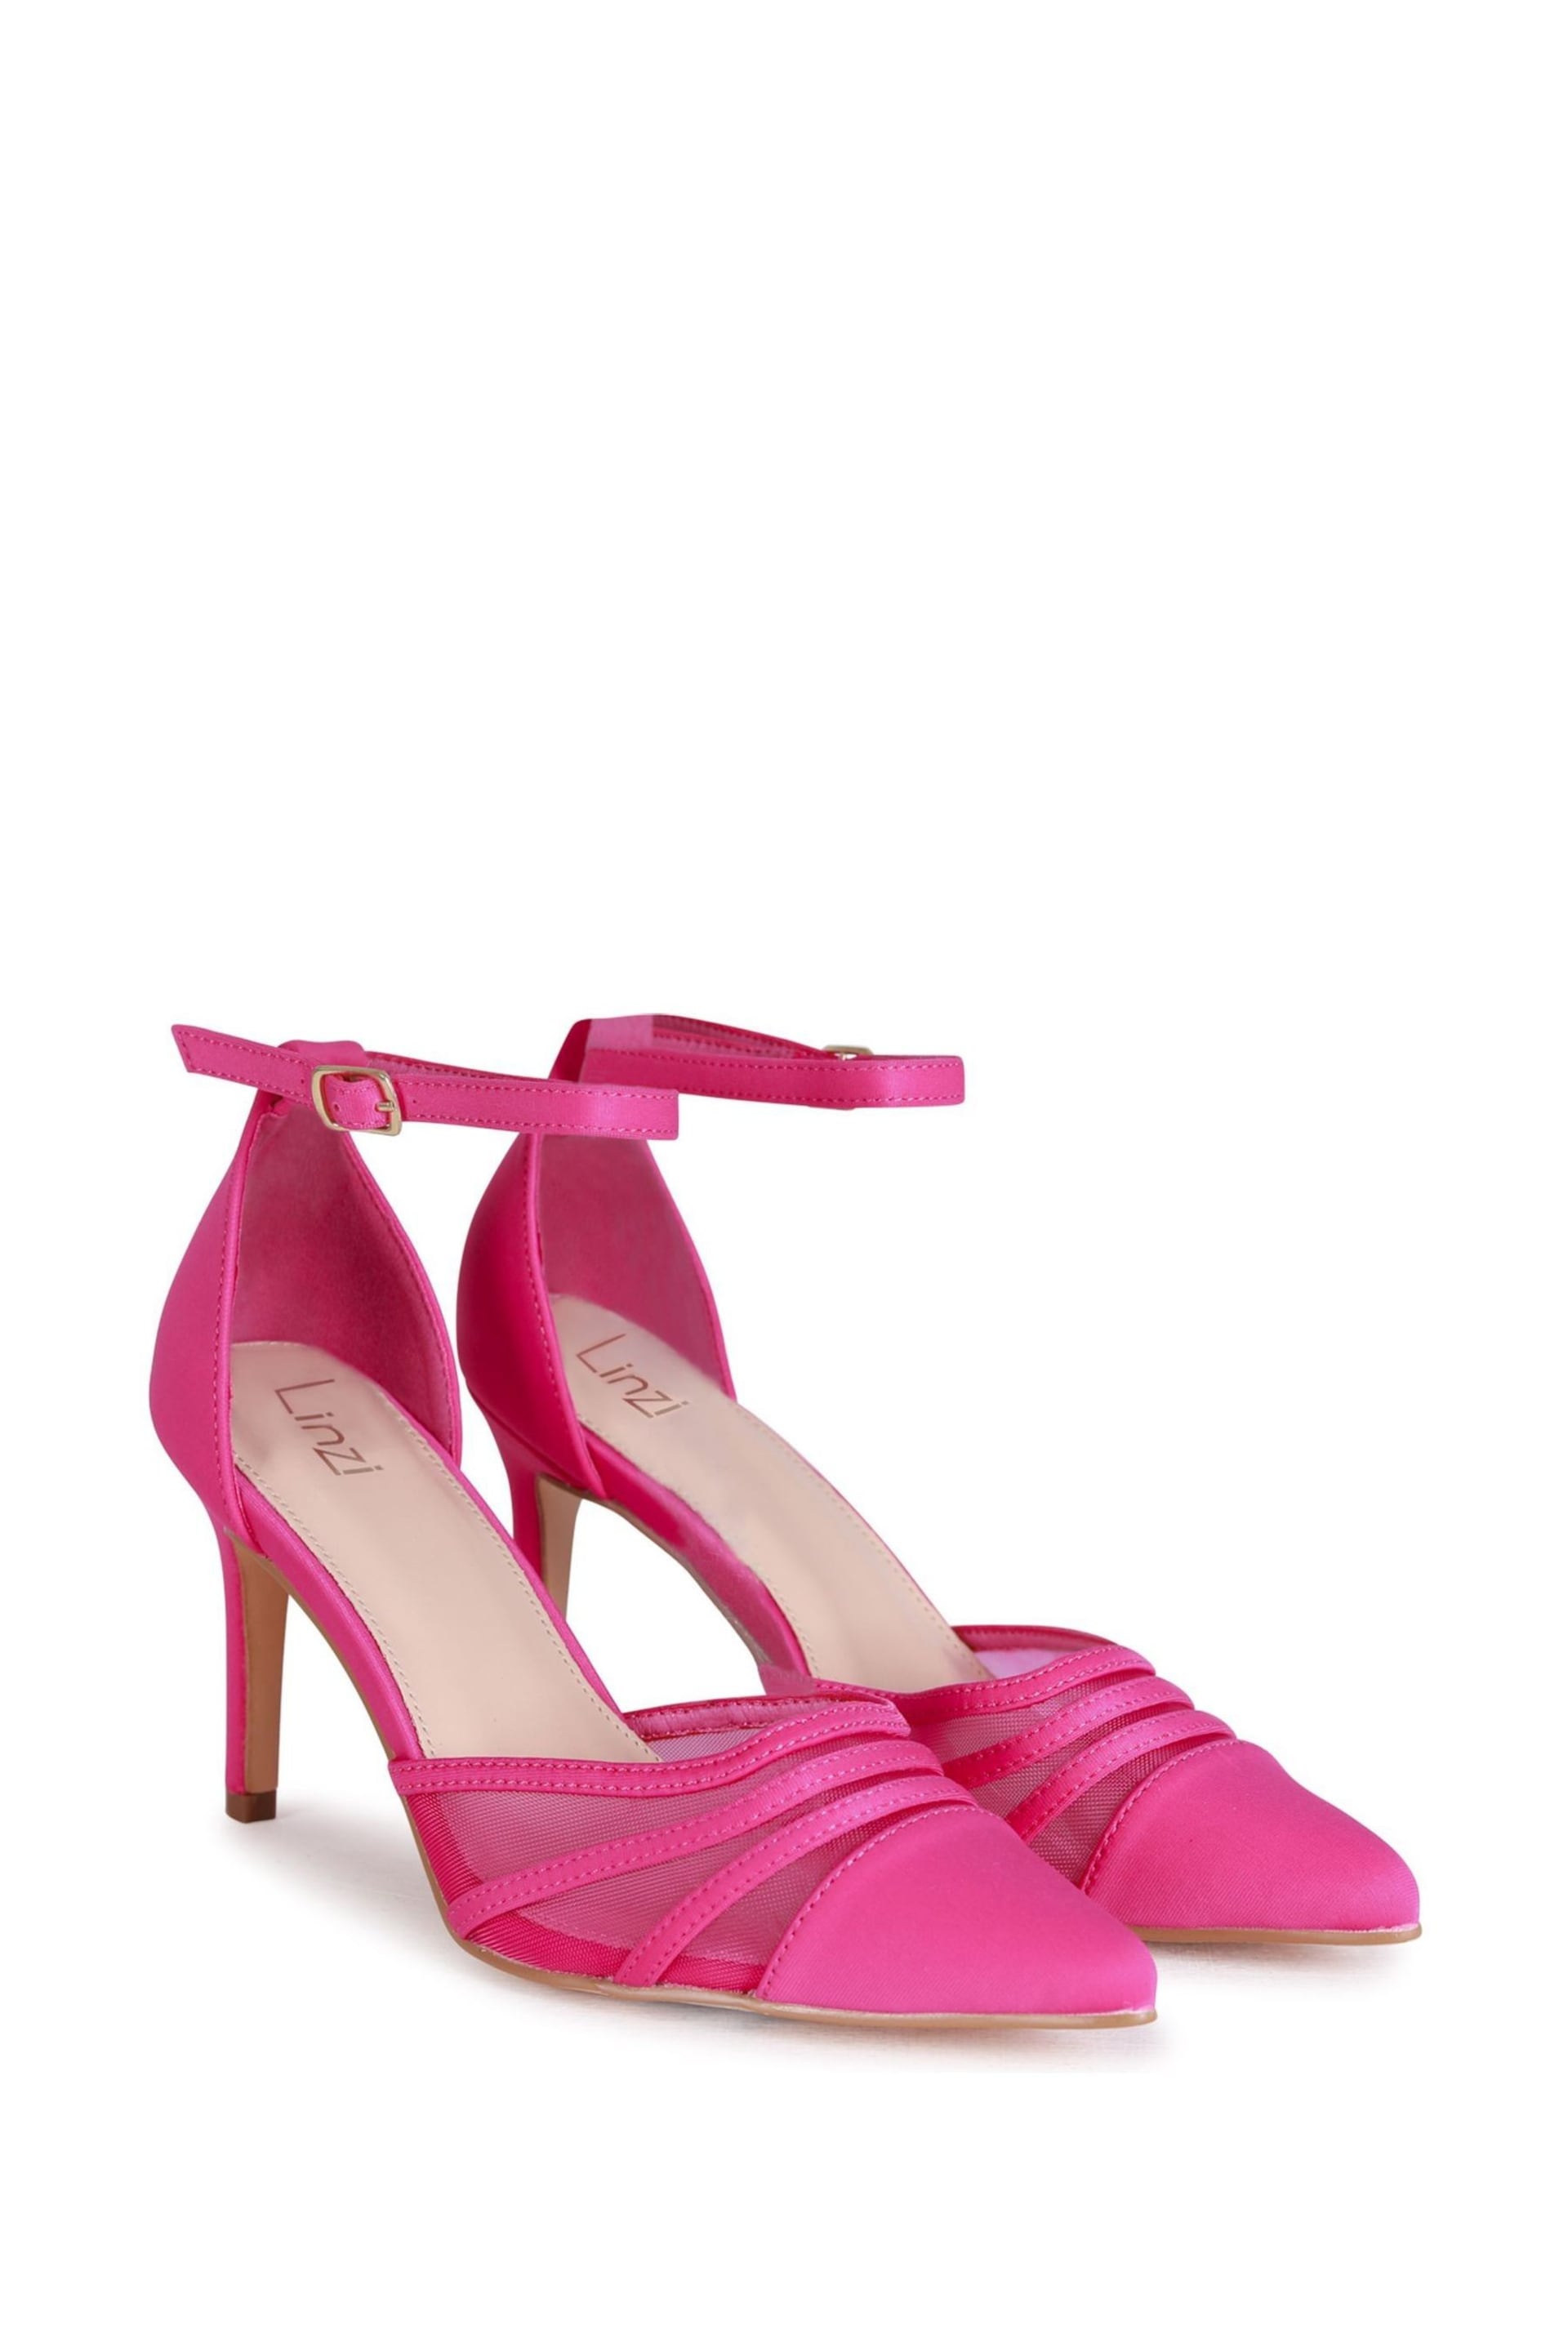 Linzi Pink Serri Court Stiletto Heels With Mesh Front Detail - Image 3 of 4